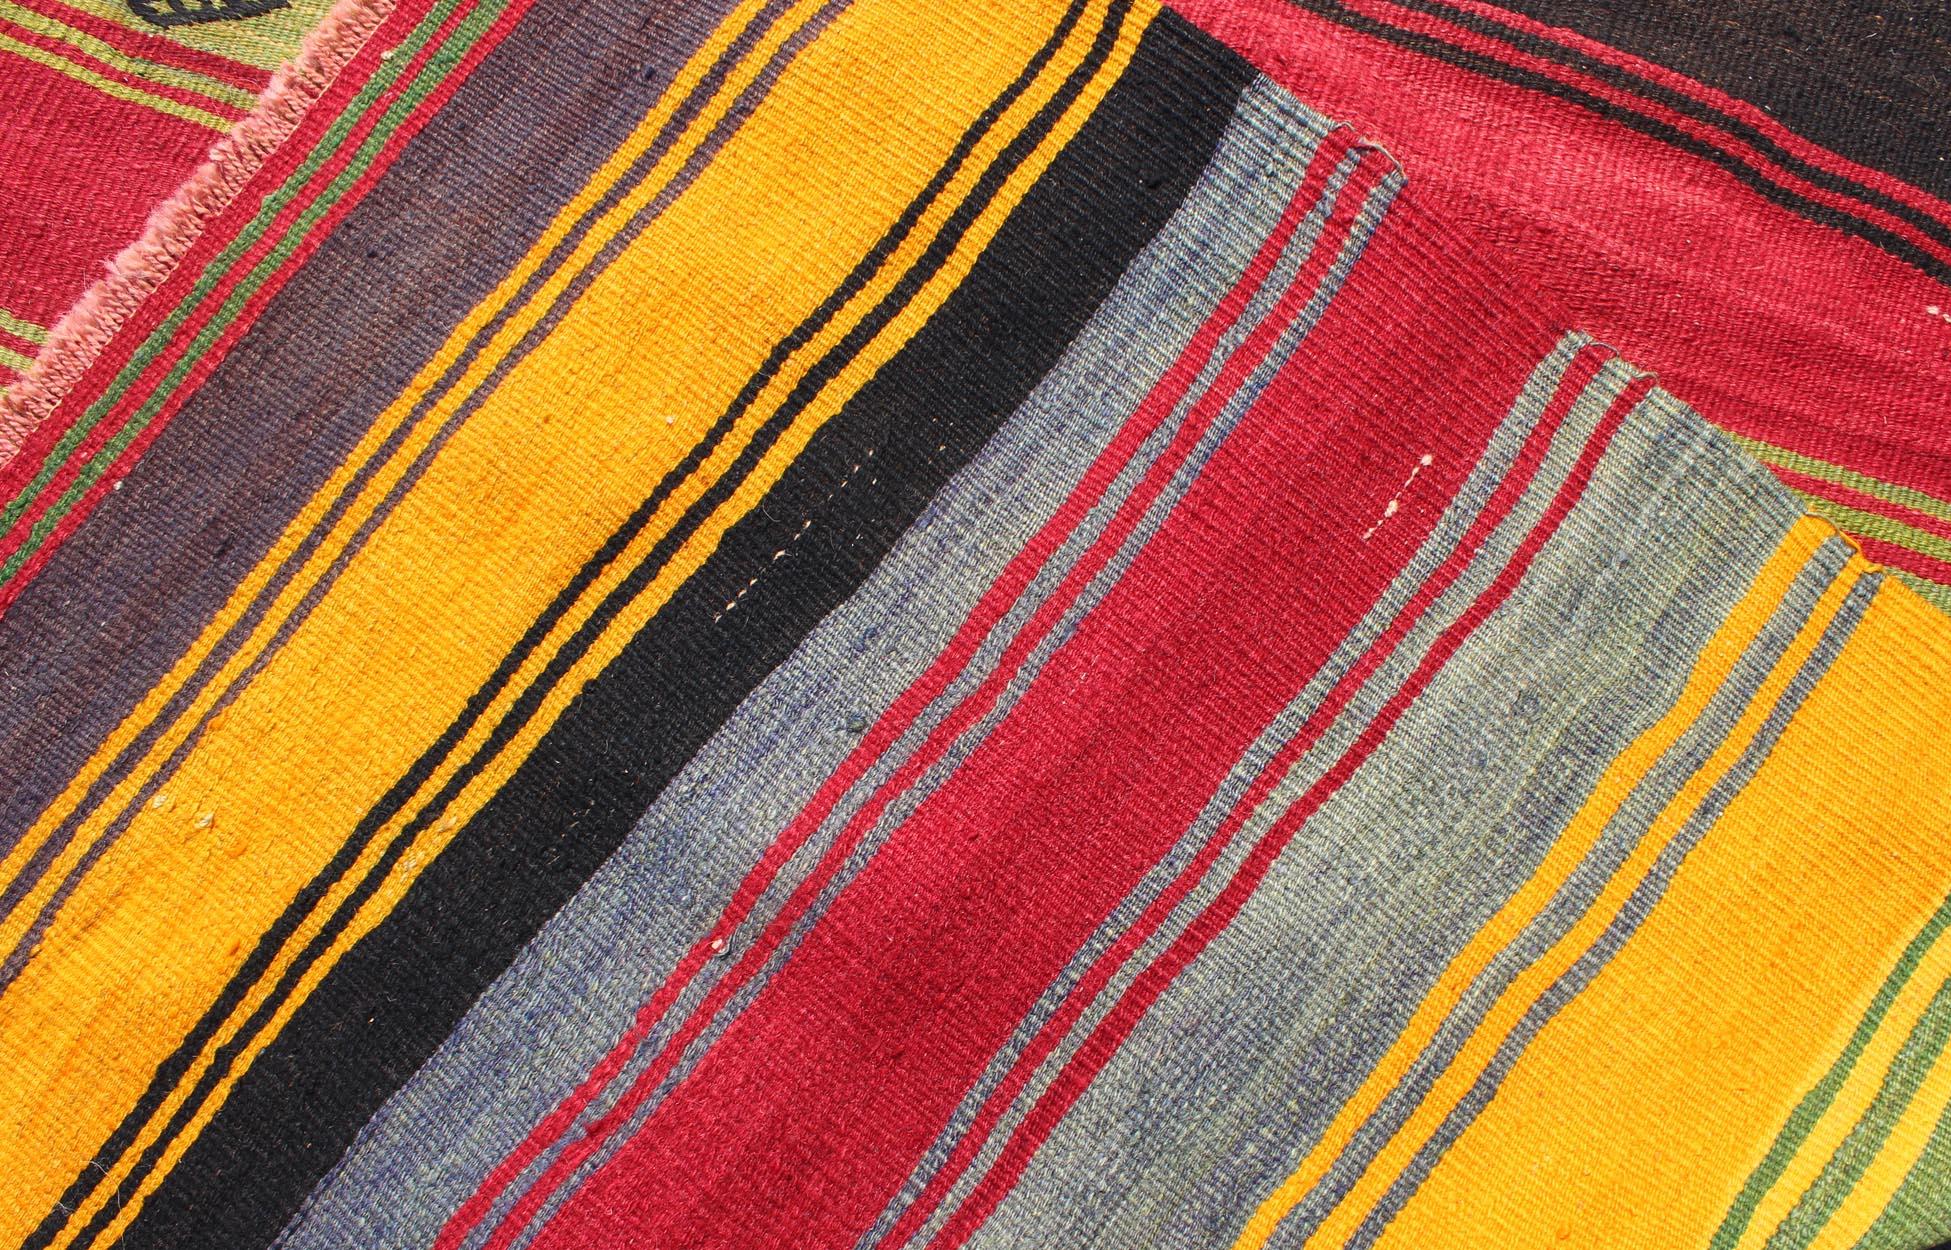 Bright & Colorful Vintage Turkish Kilim Rug in Stripes Design with Vivid Colors For Sale 6